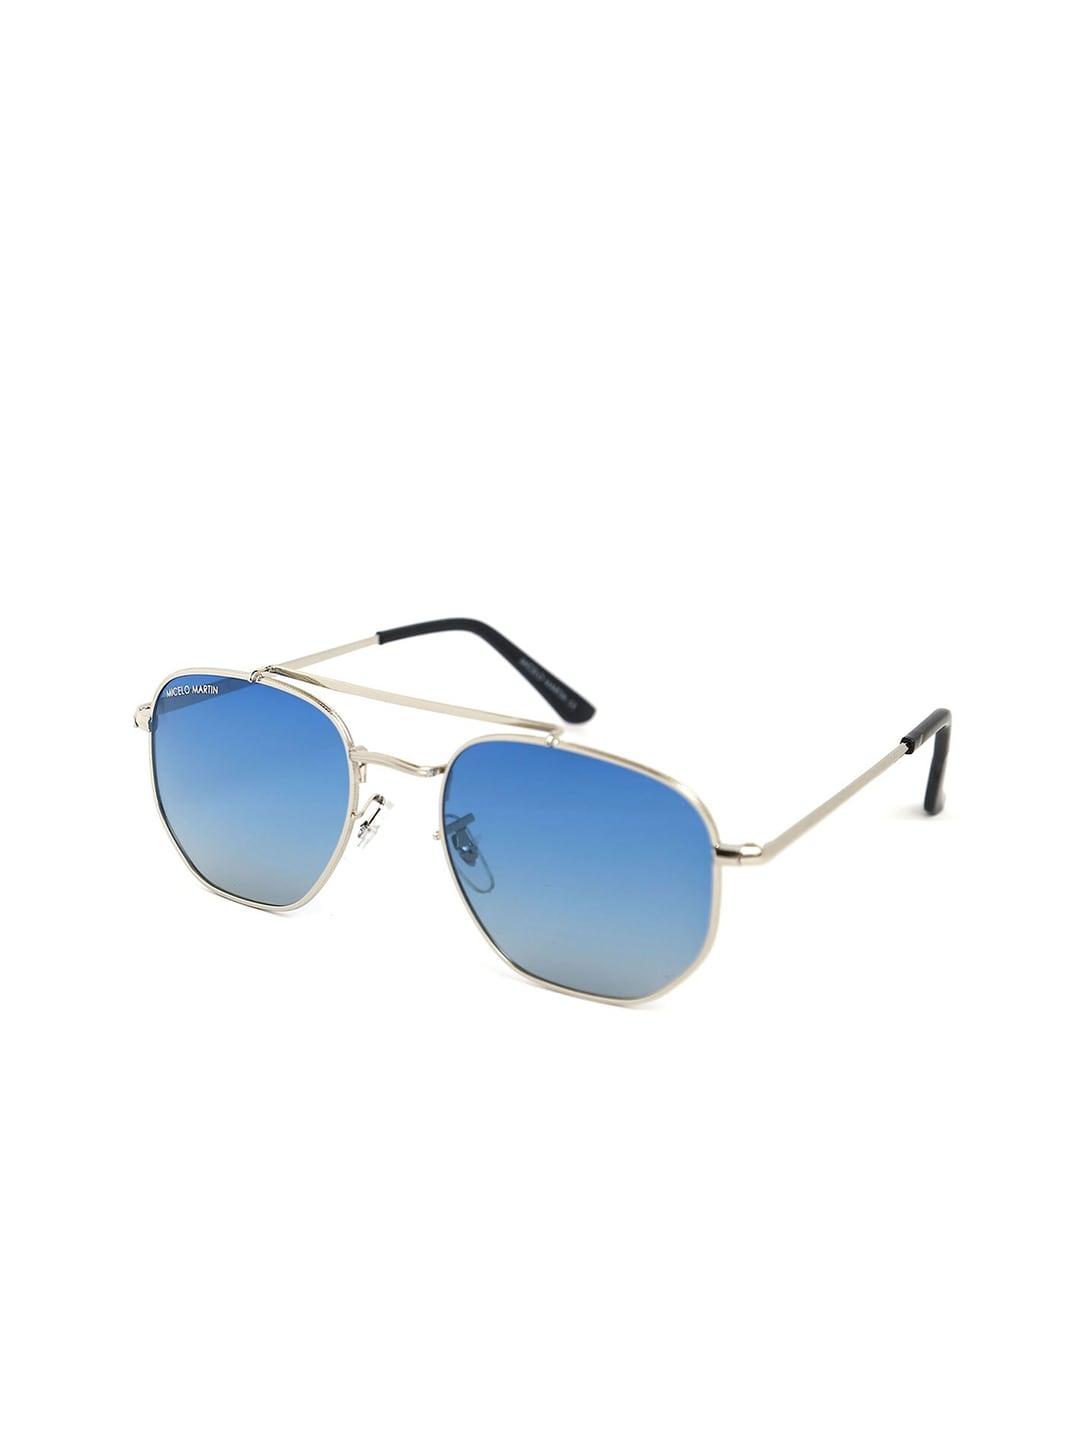 micelo martin men blue lens & silver-toned uv protected aviator sunglasses mm1005 c5